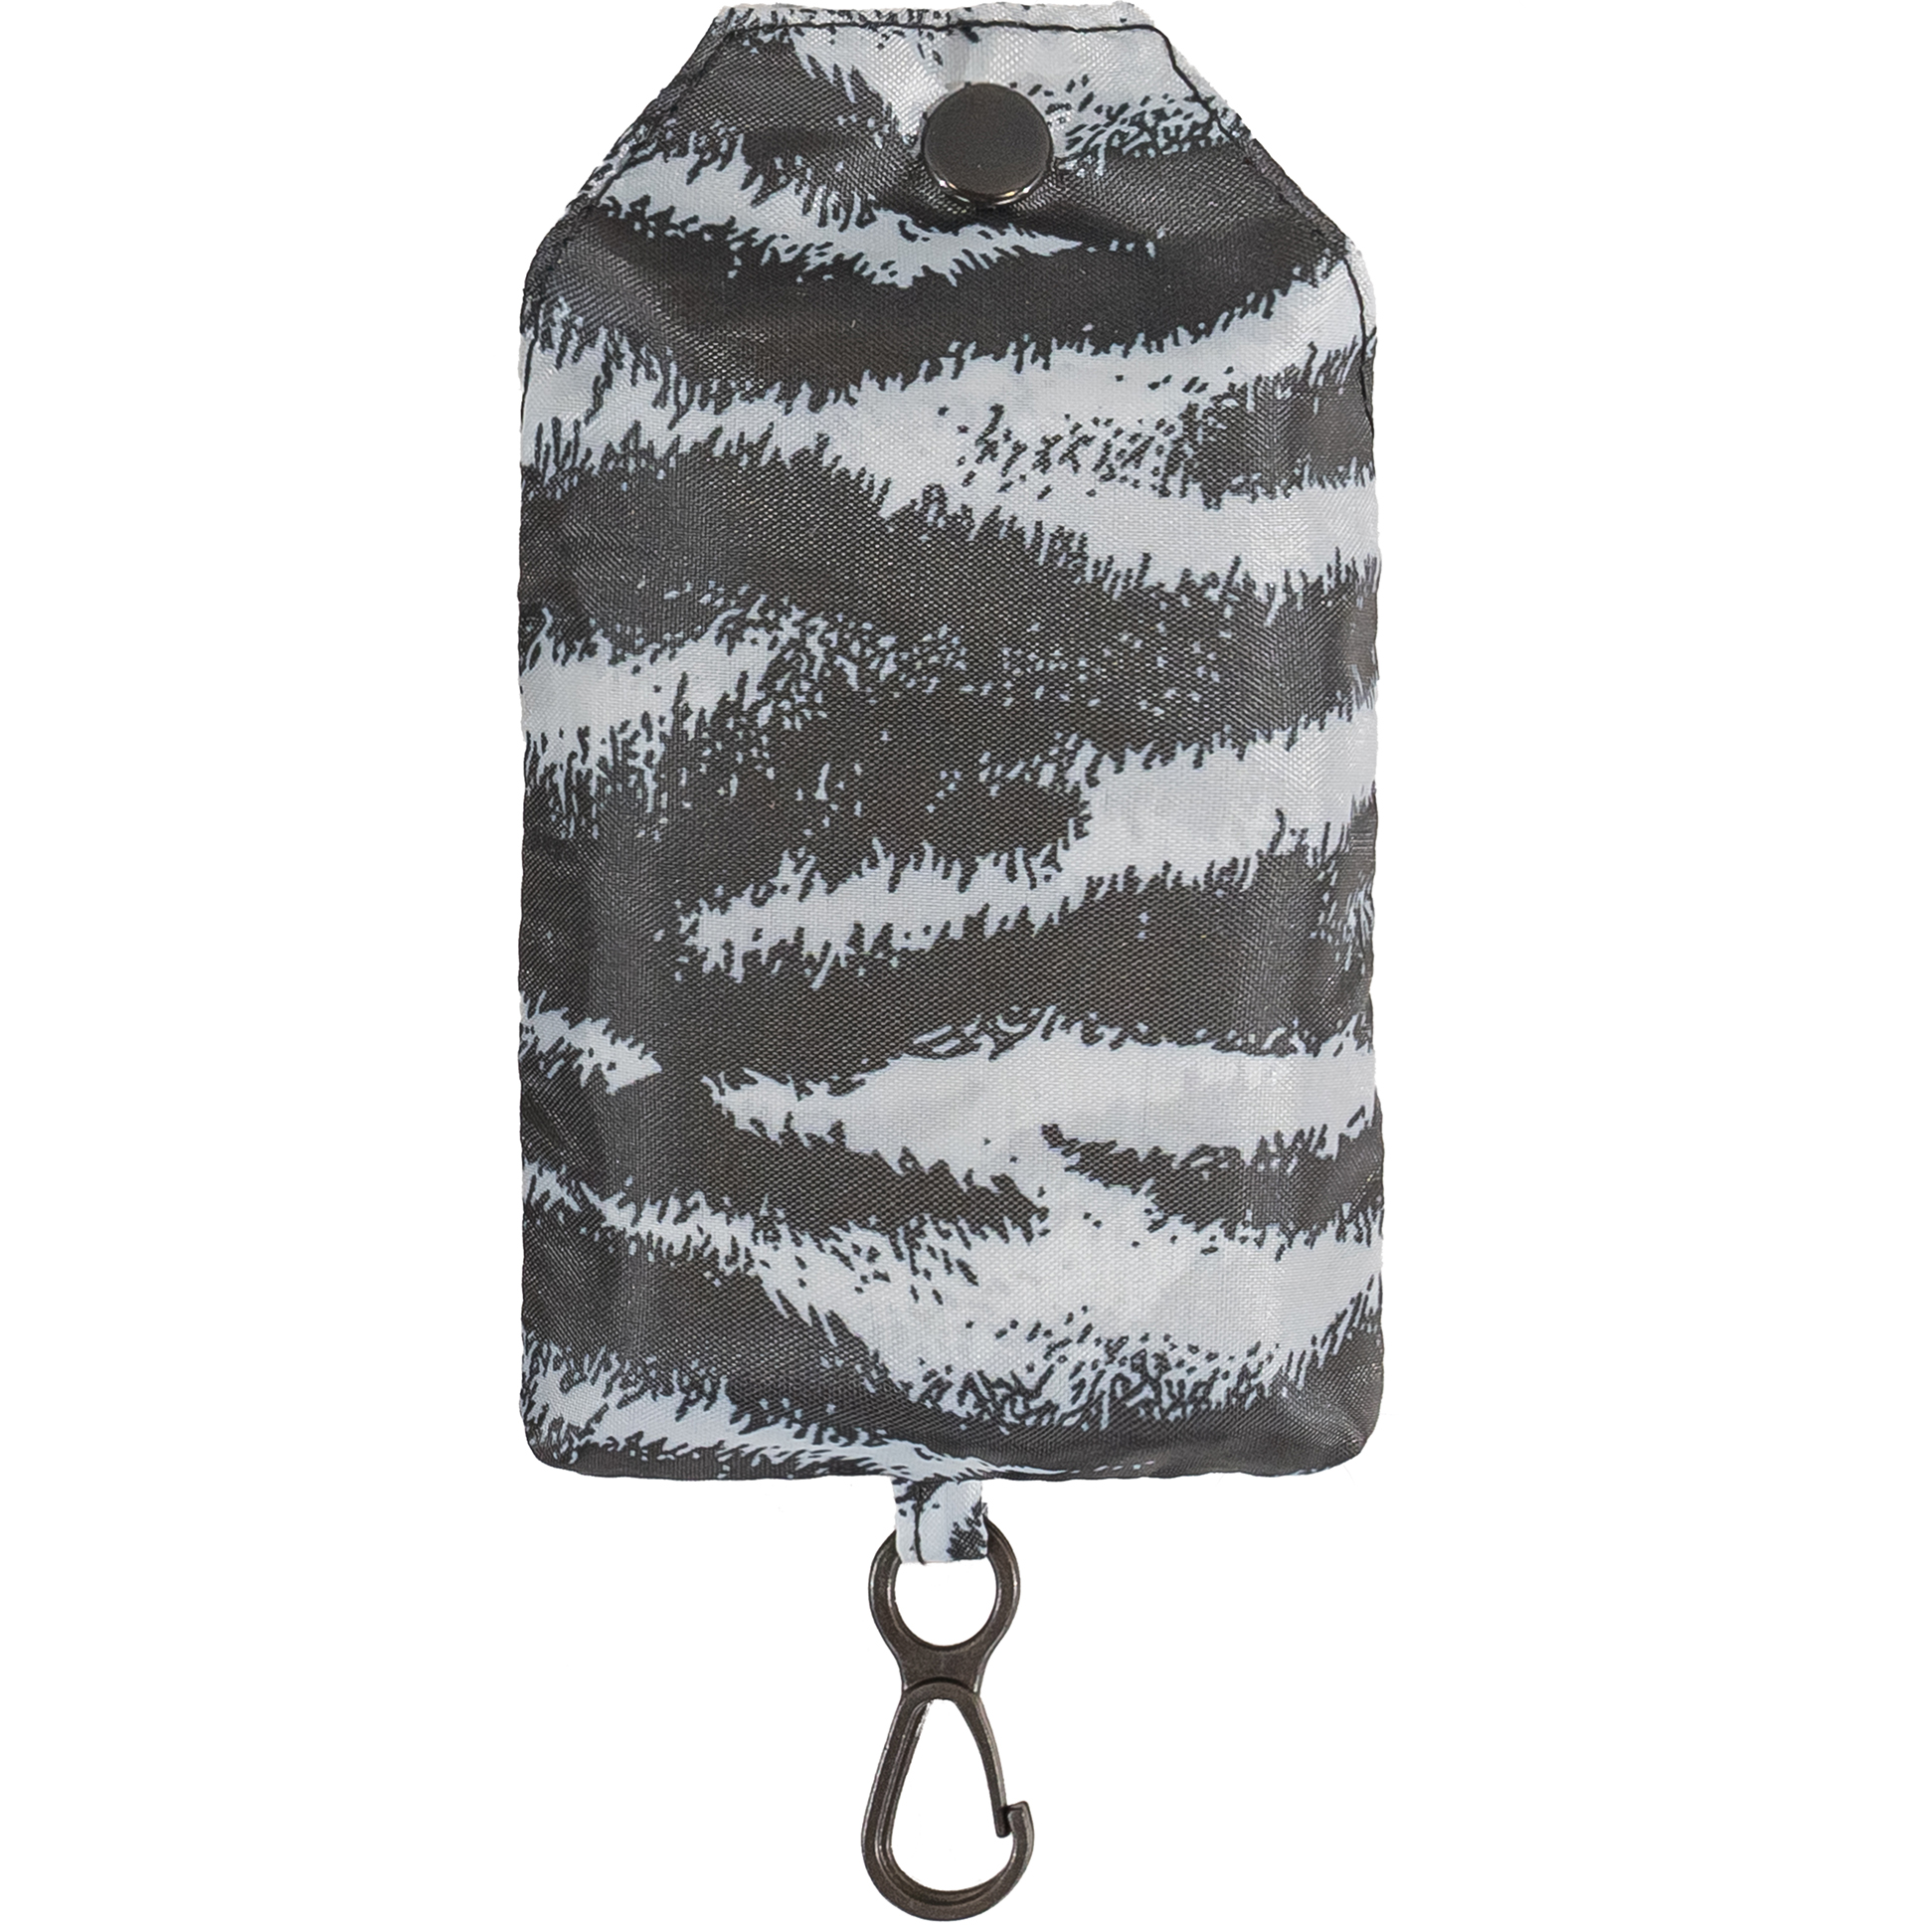 Zebra Print Reusable Shopping Bag (CB019)